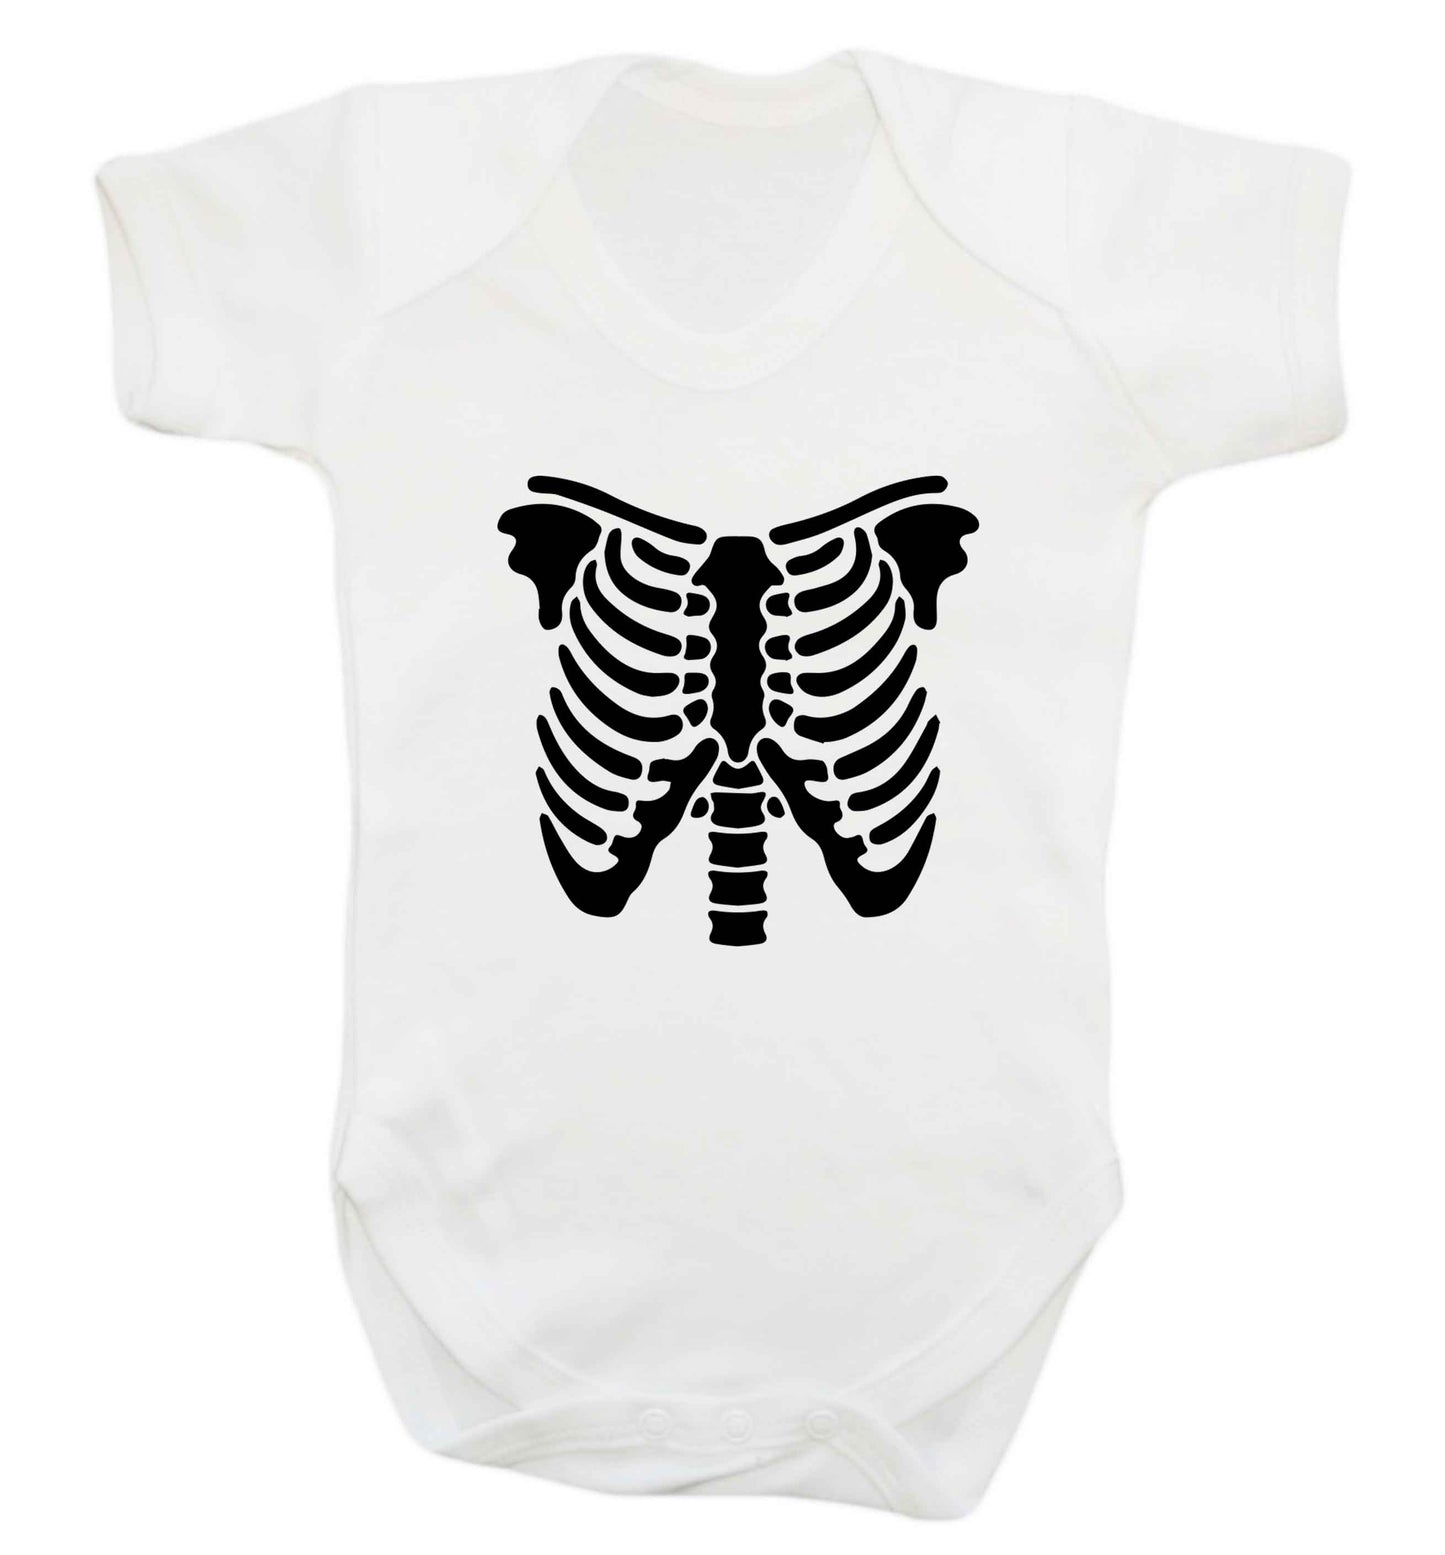 Skeleton ribcage baby vest white 18-24 months